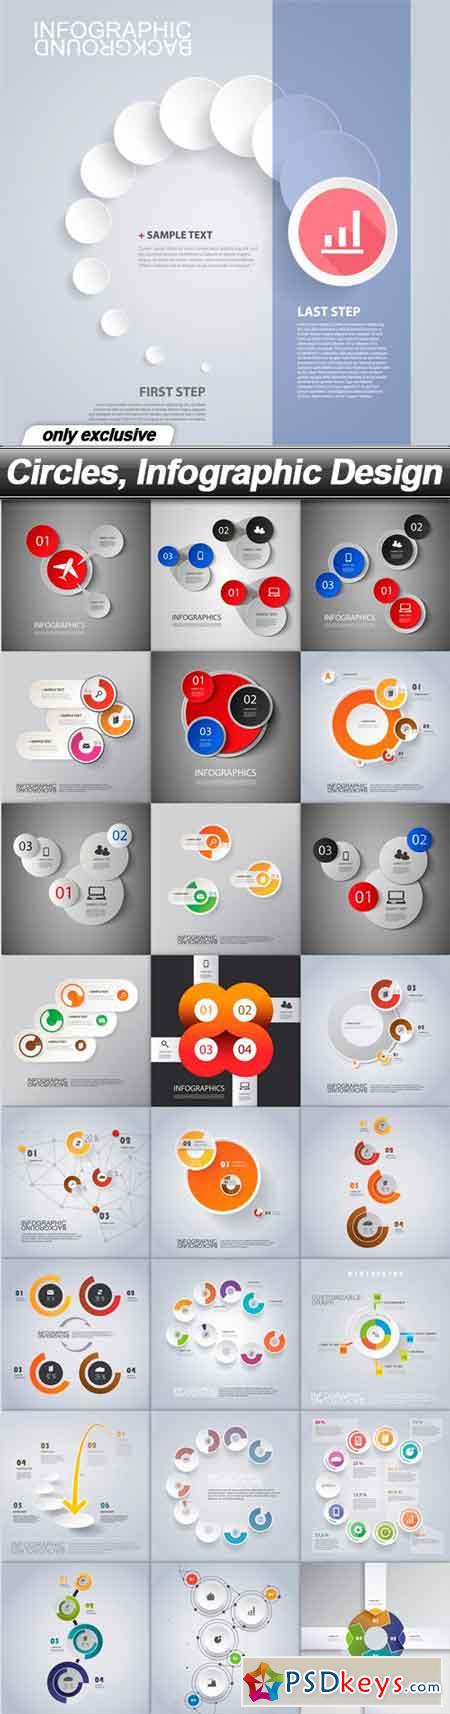 Circles, Infographic Design - 25 EPS